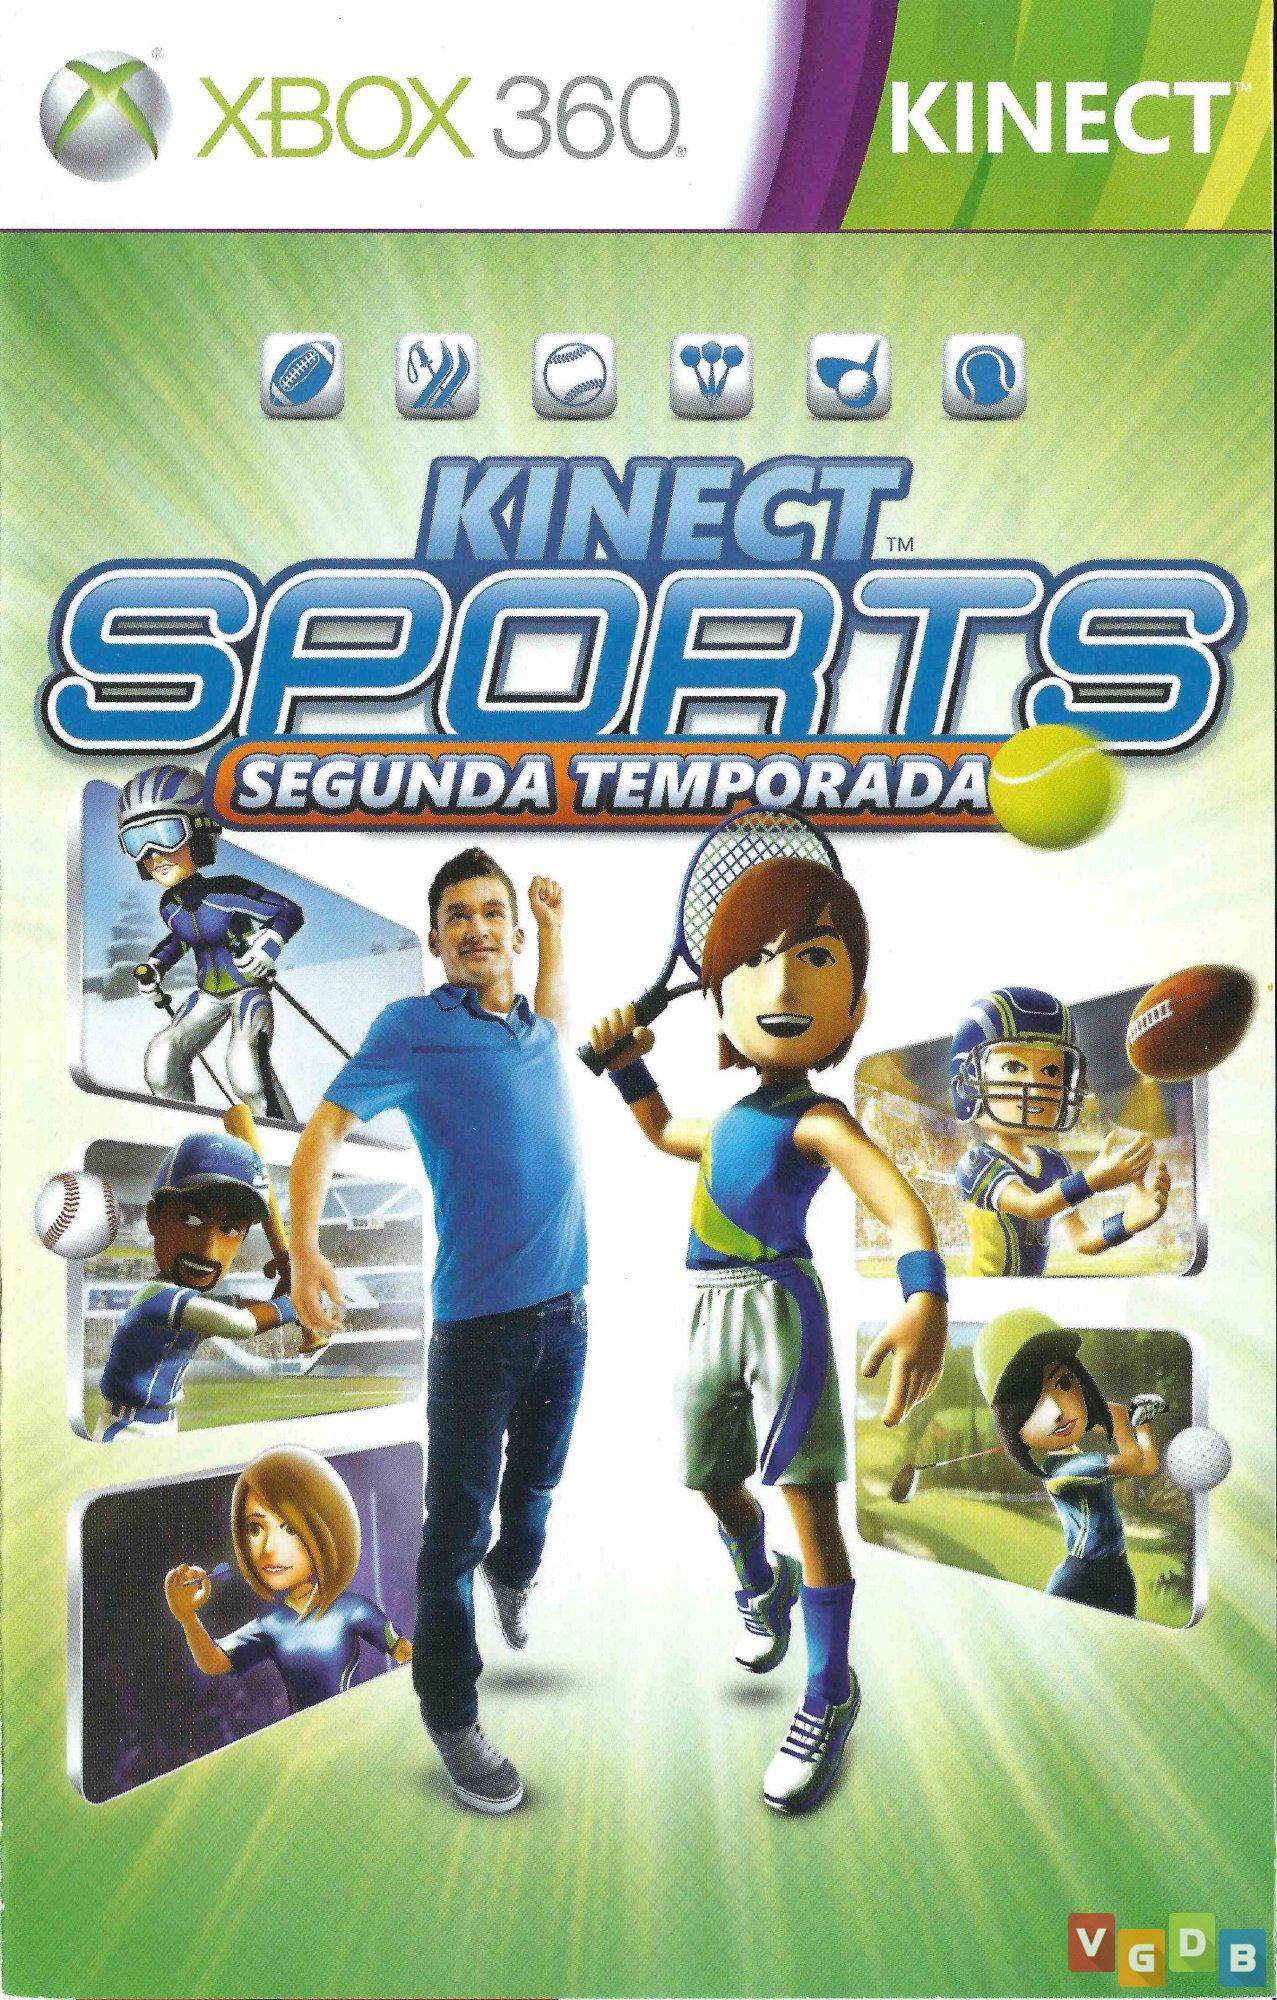 https://www.vgdb.com.br/gf/fotos/games/media_33686/kinect-sports-segunda-temporada-33686.jpg